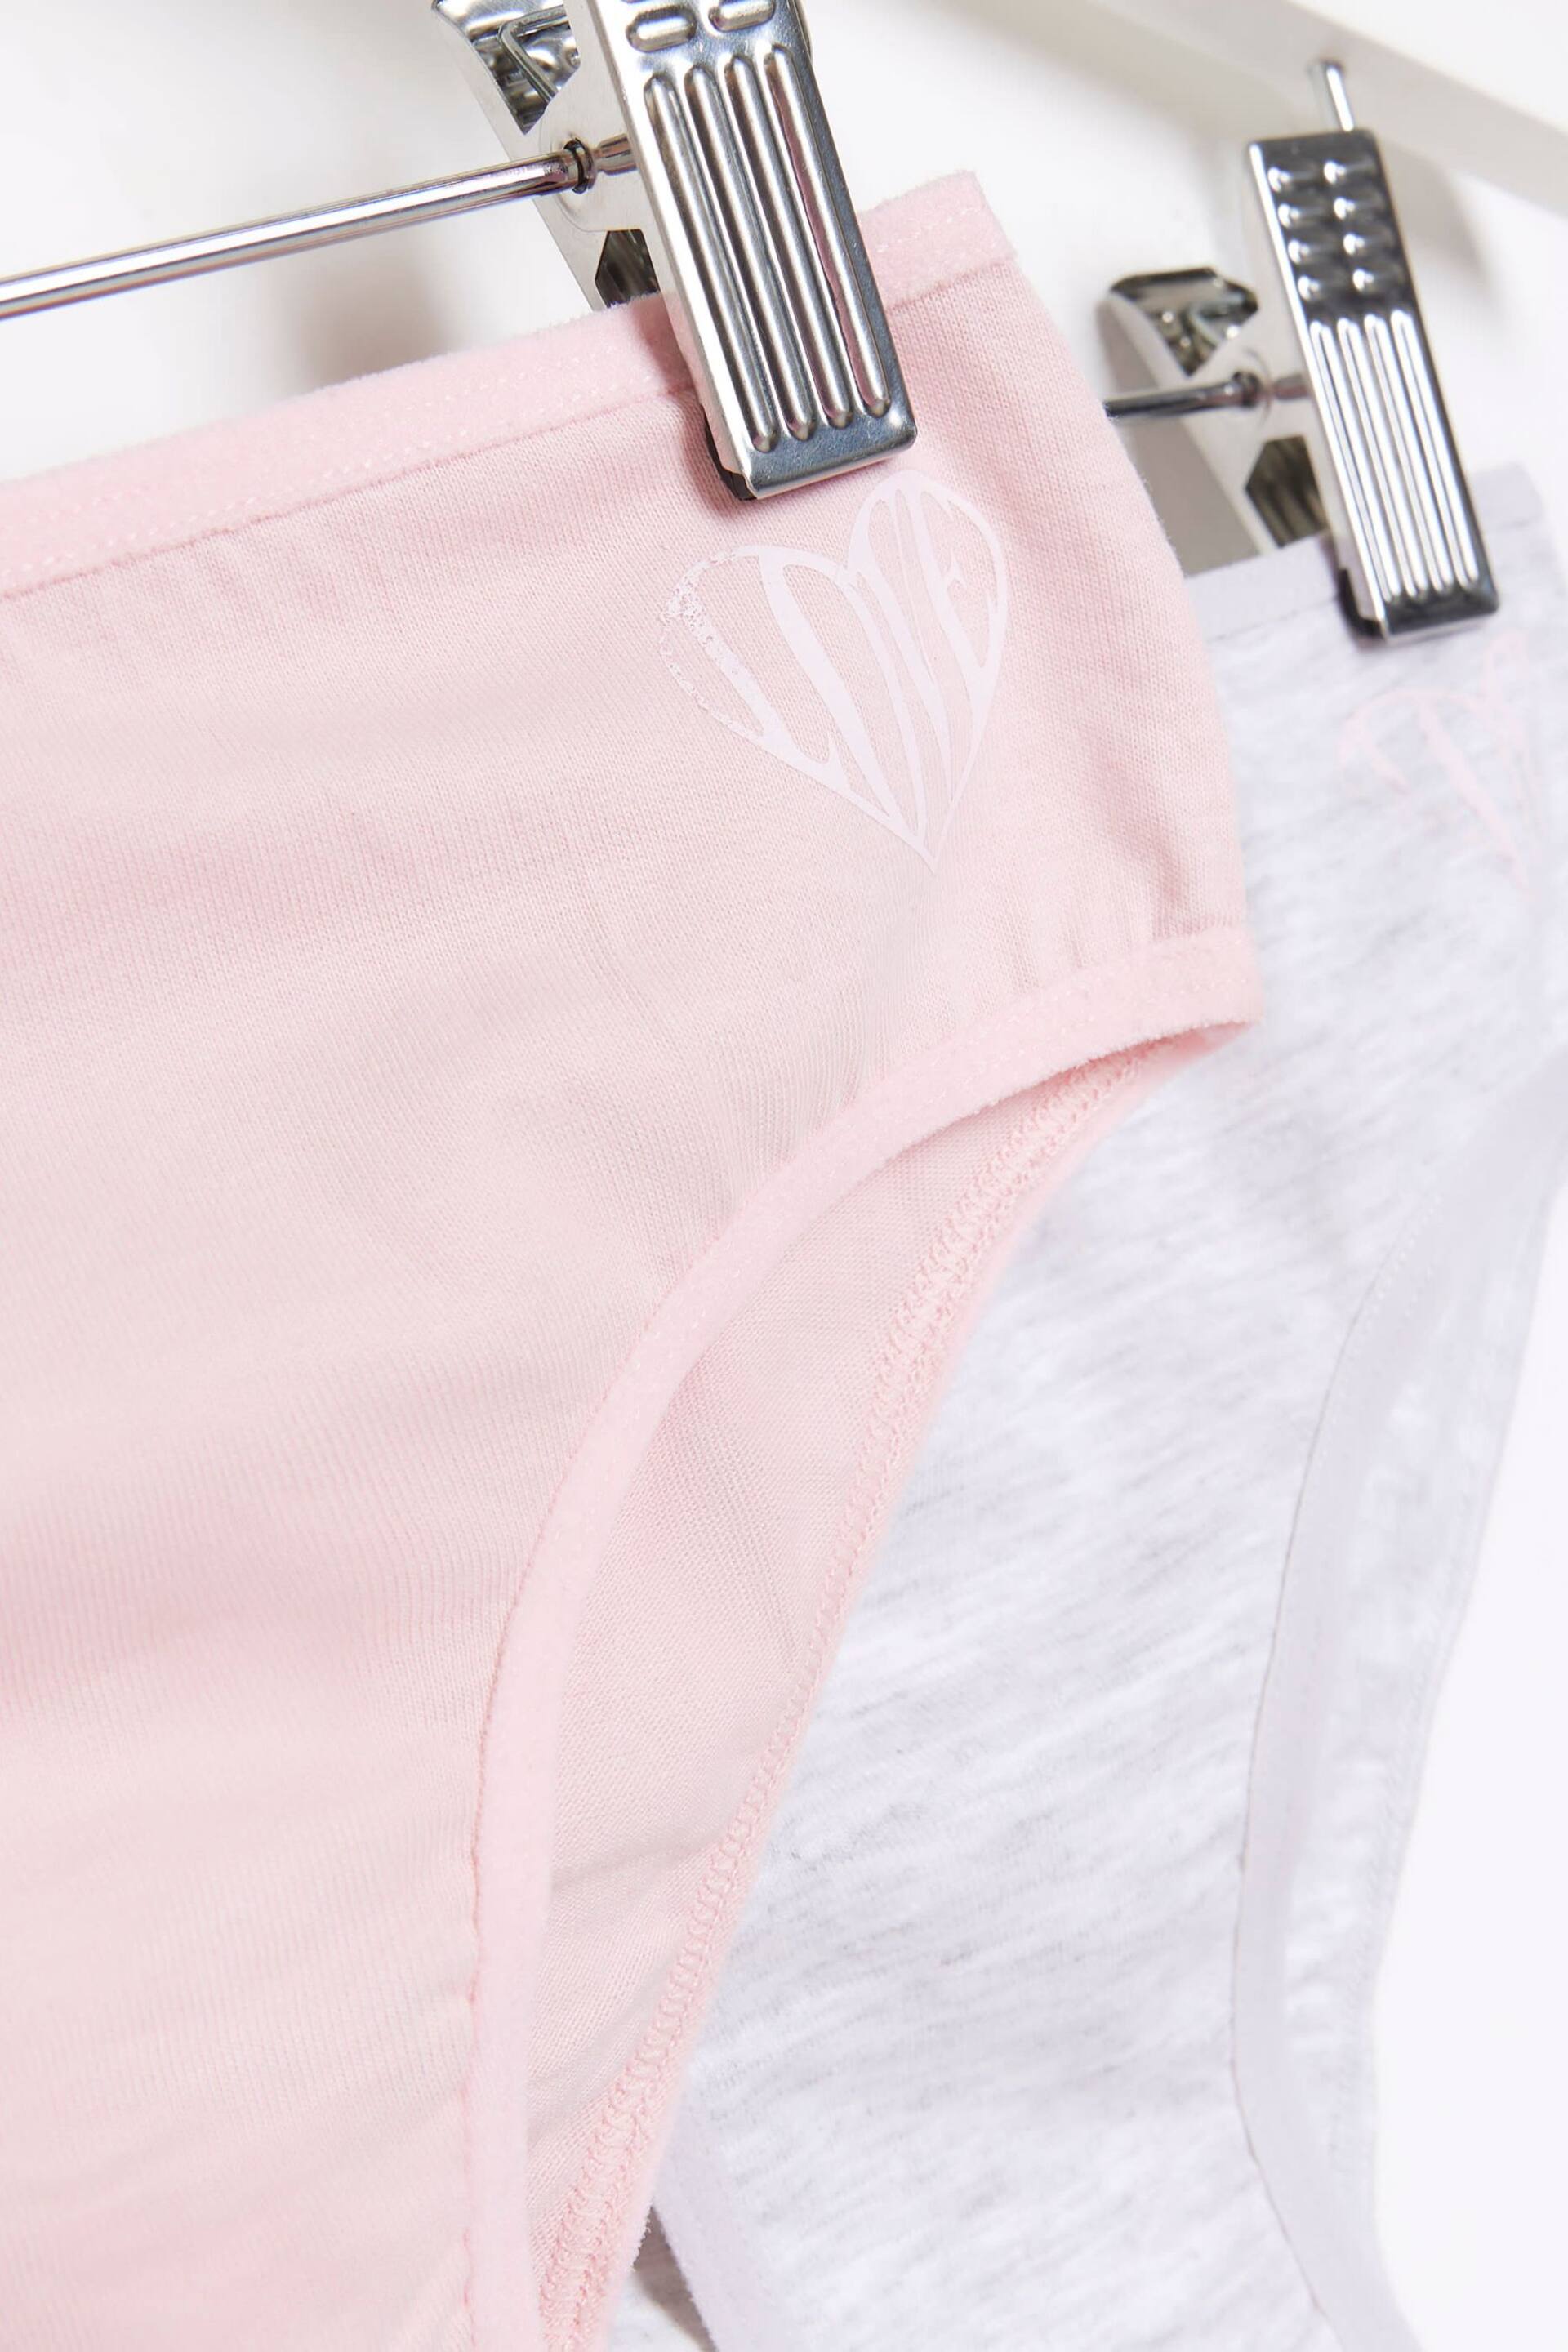 River Island Pink Girls Underwear Vests And Briefs 4 Piece Set - Image 2 of 4